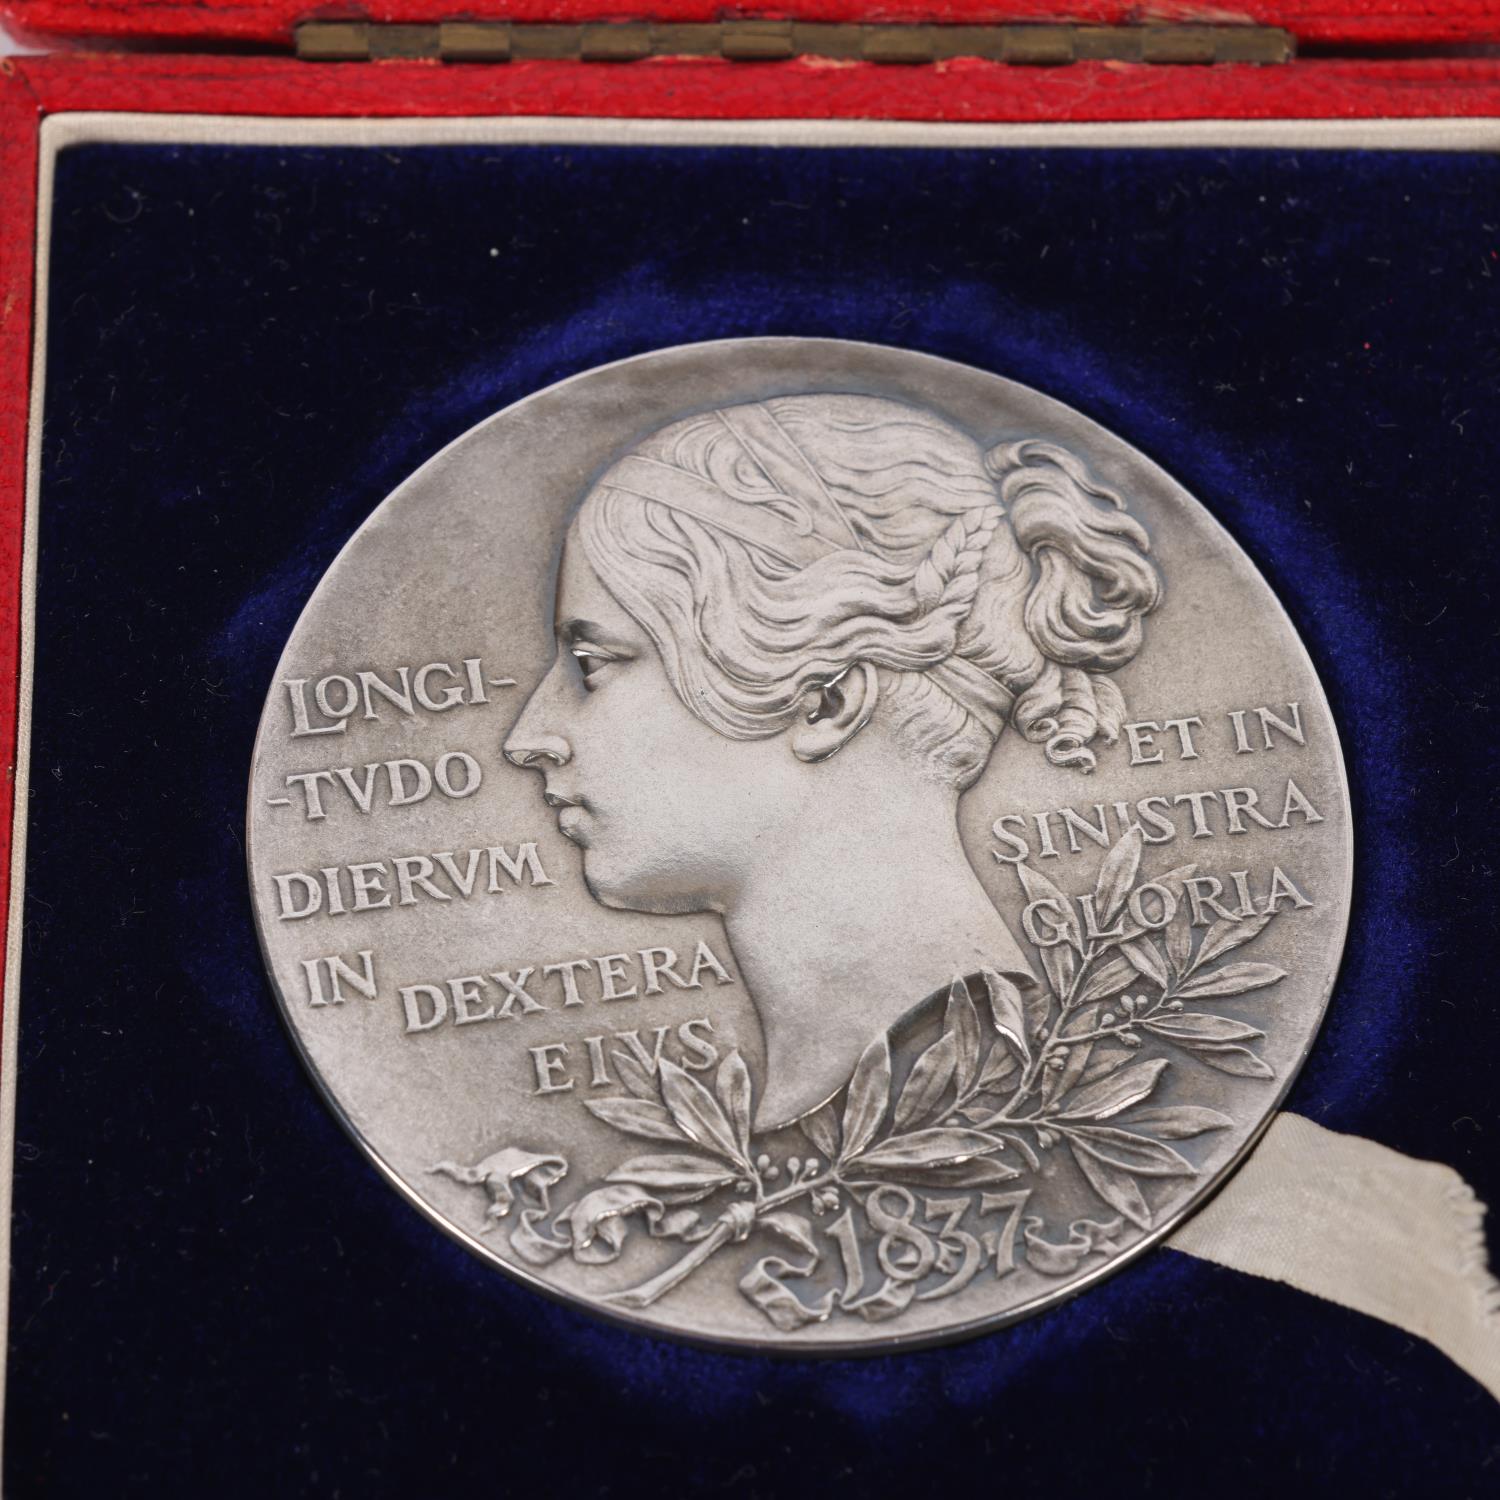 Queen Victorian Diamond Jubilee medallion, 1837 - 1897, diameter 5.5cm, original Morocco leather - Image 2 of 3